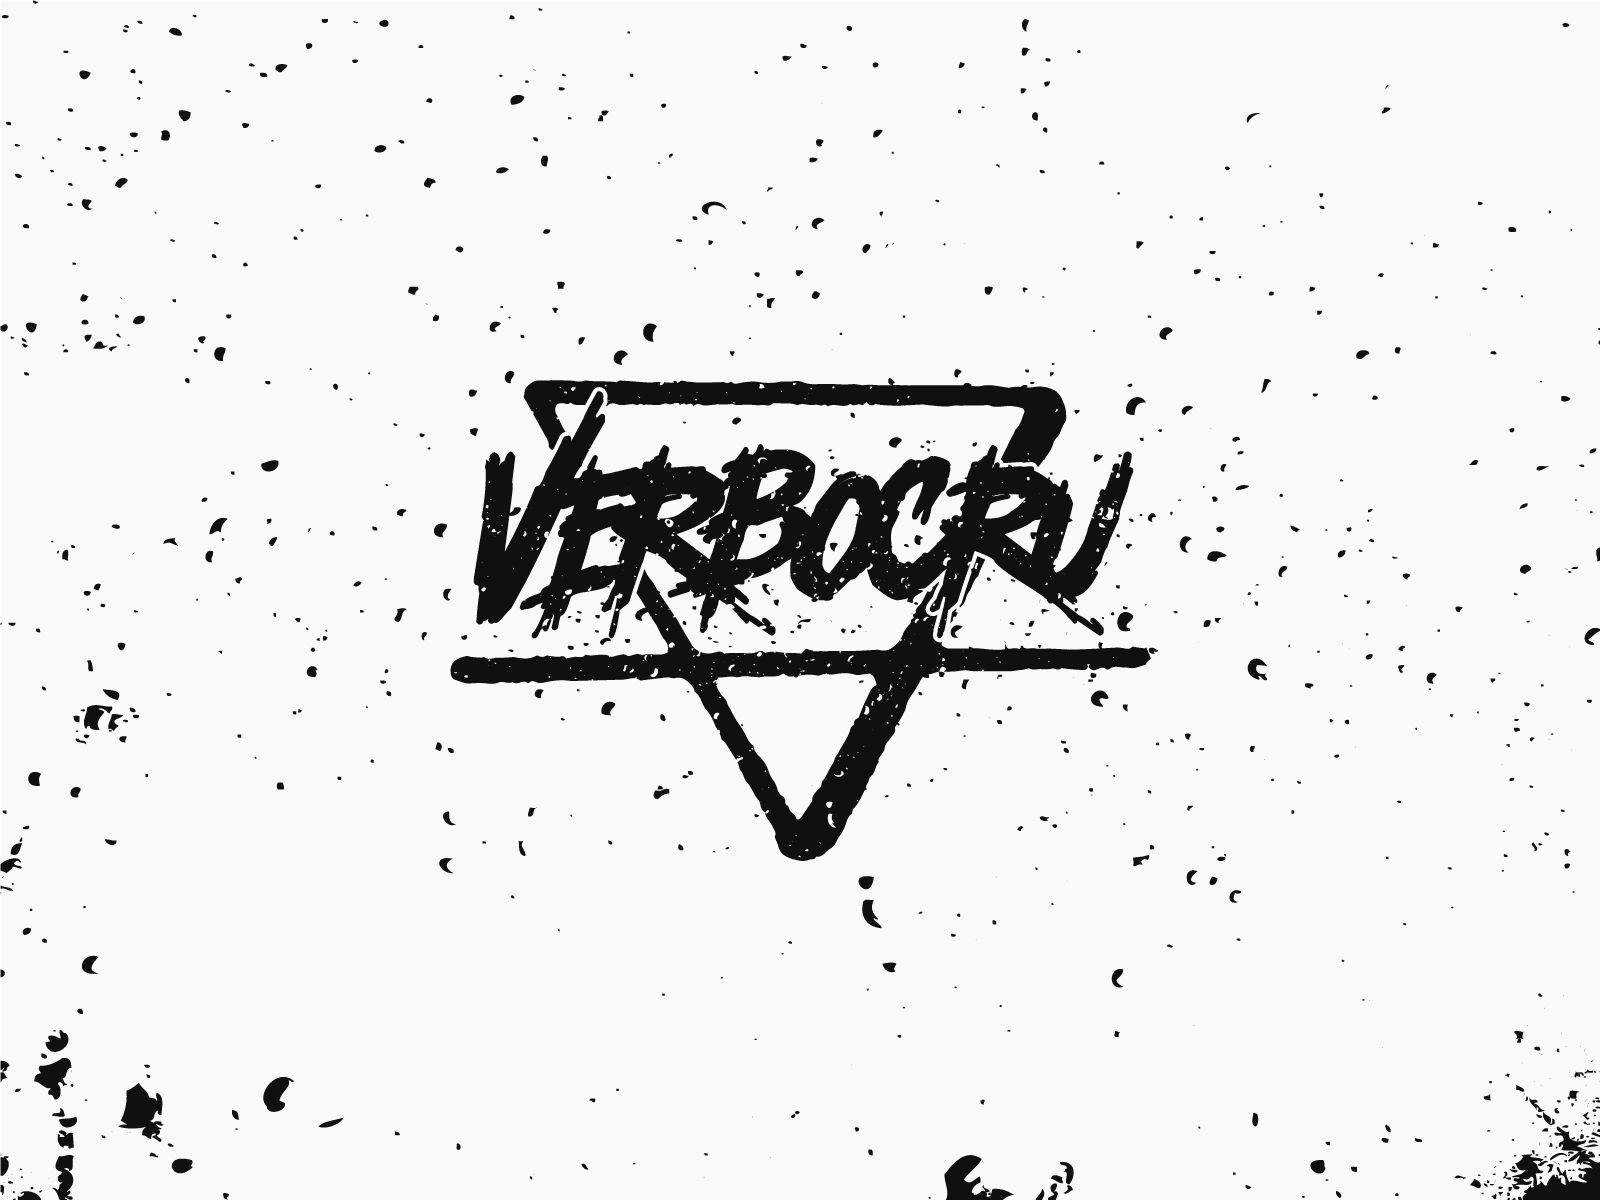 Verbocru | Identidade Visual by Gulis Studio on Dribbble